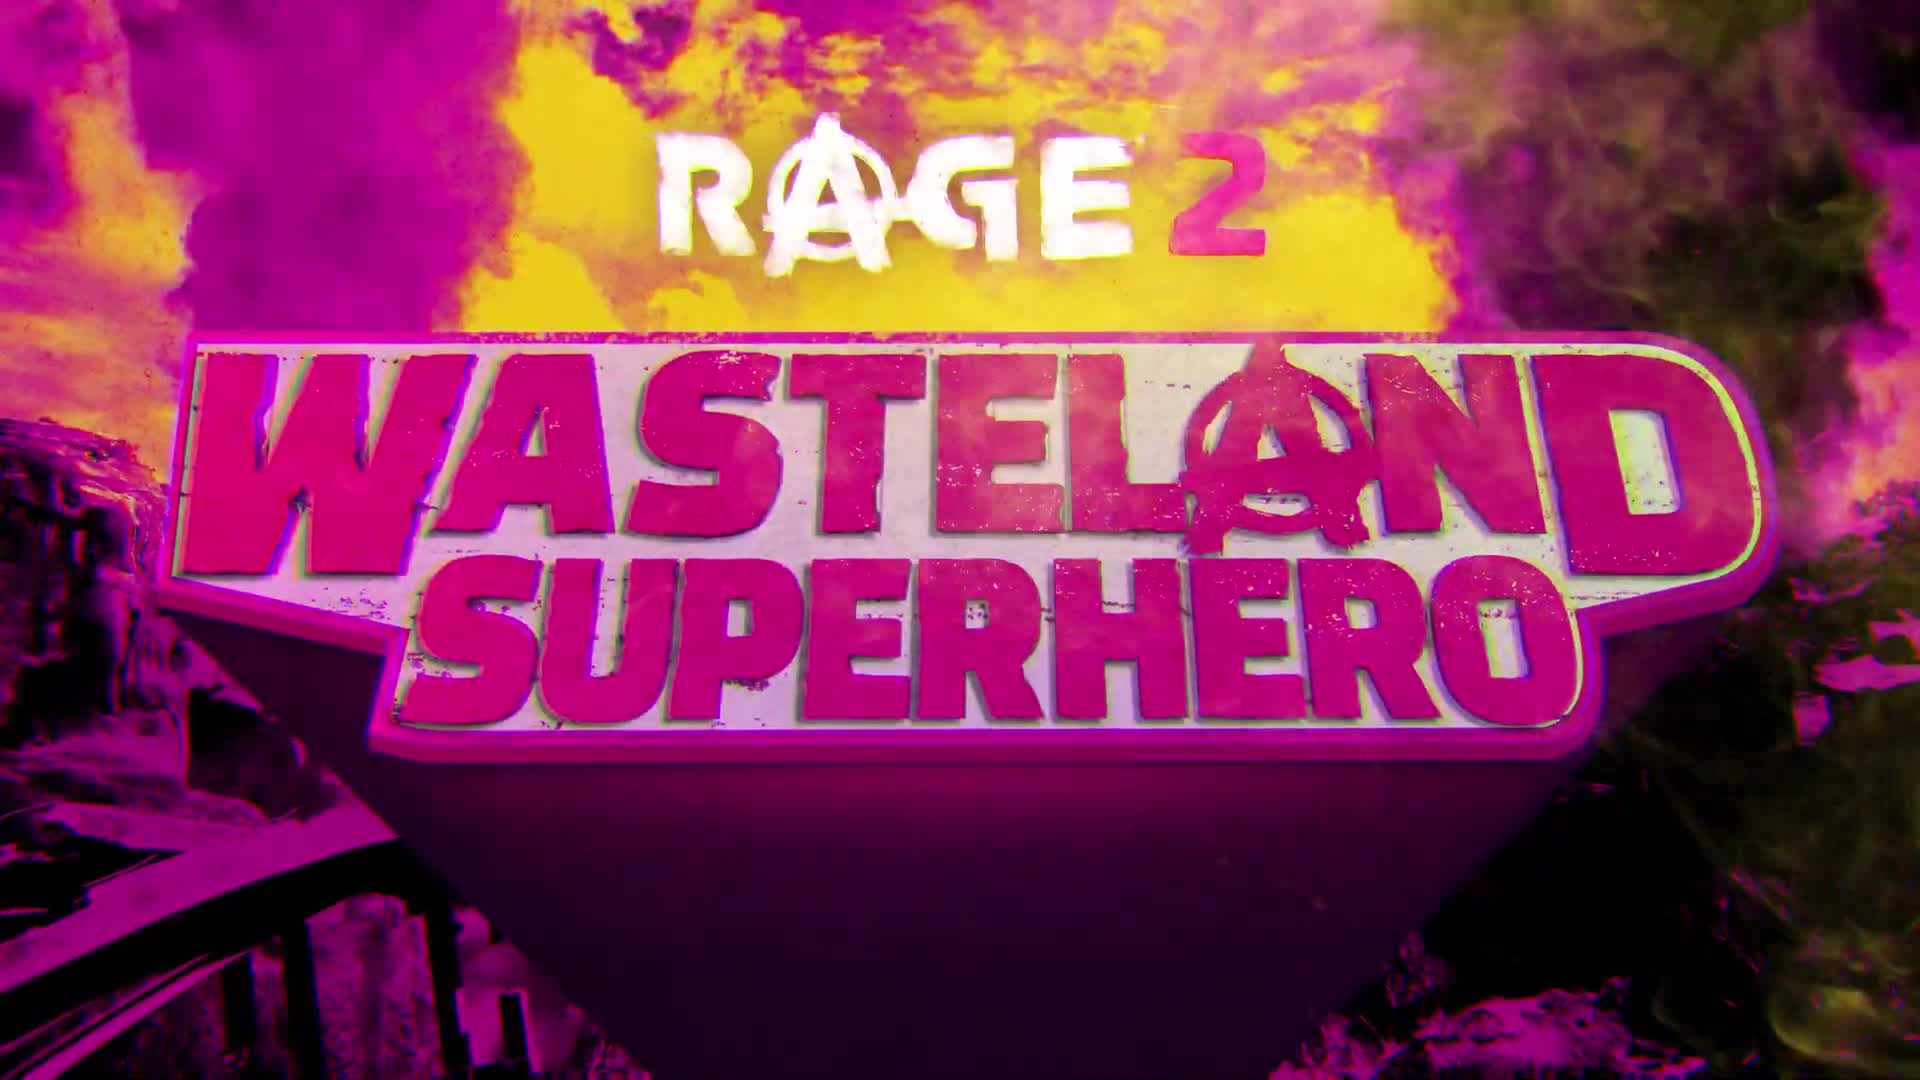 Rage 2 - Wasteland Superhero trailer